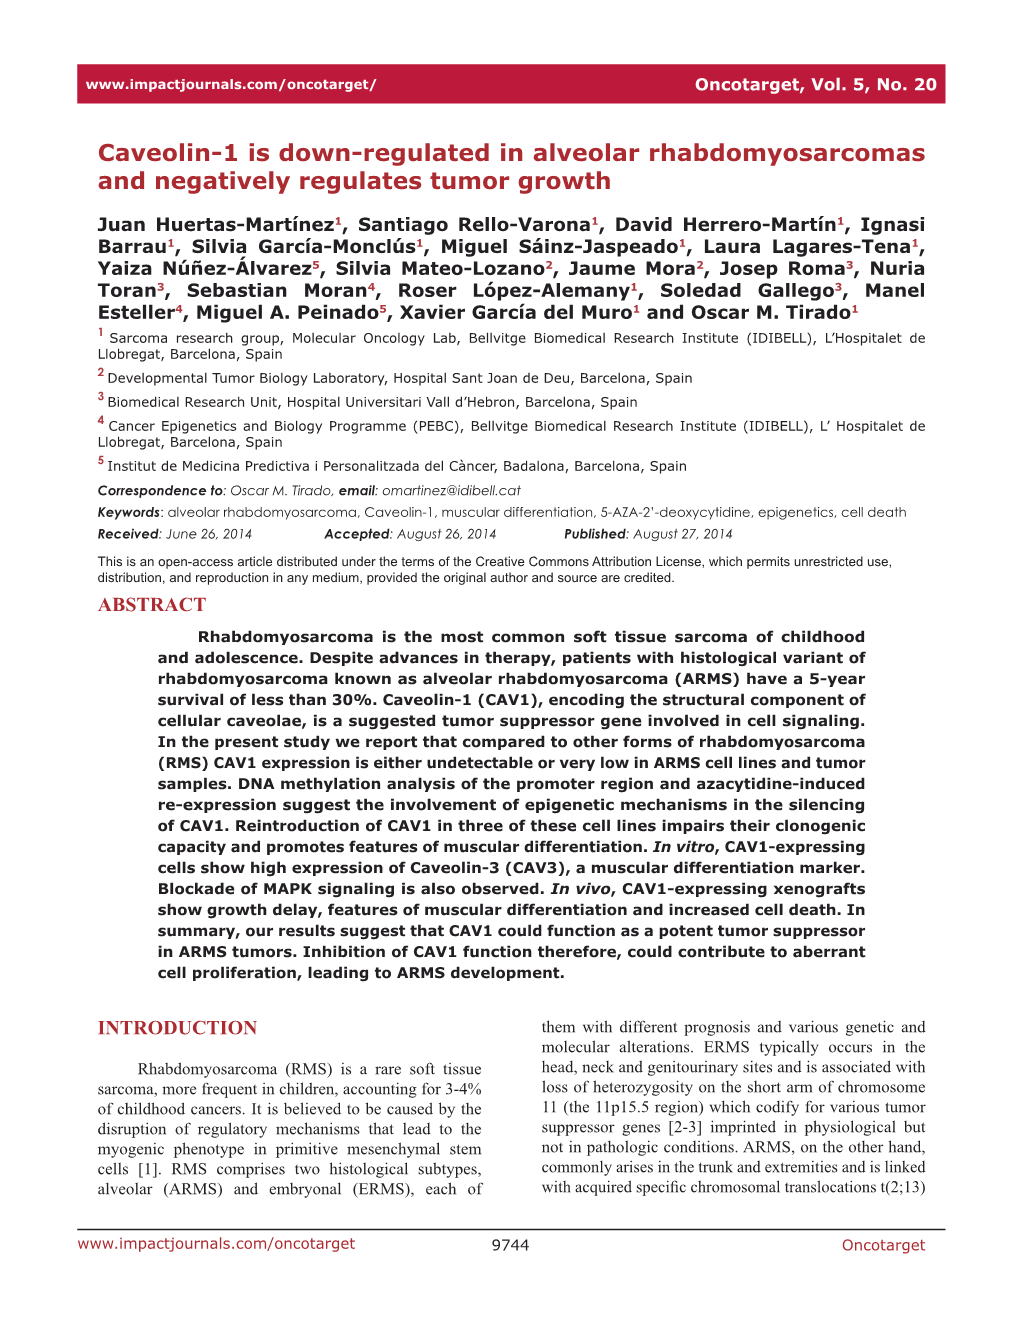 Caveolin-1 Is Down-Regulated in Alveolar Rhabdomyosarcomas and Negatively Regulates Tumor Growth